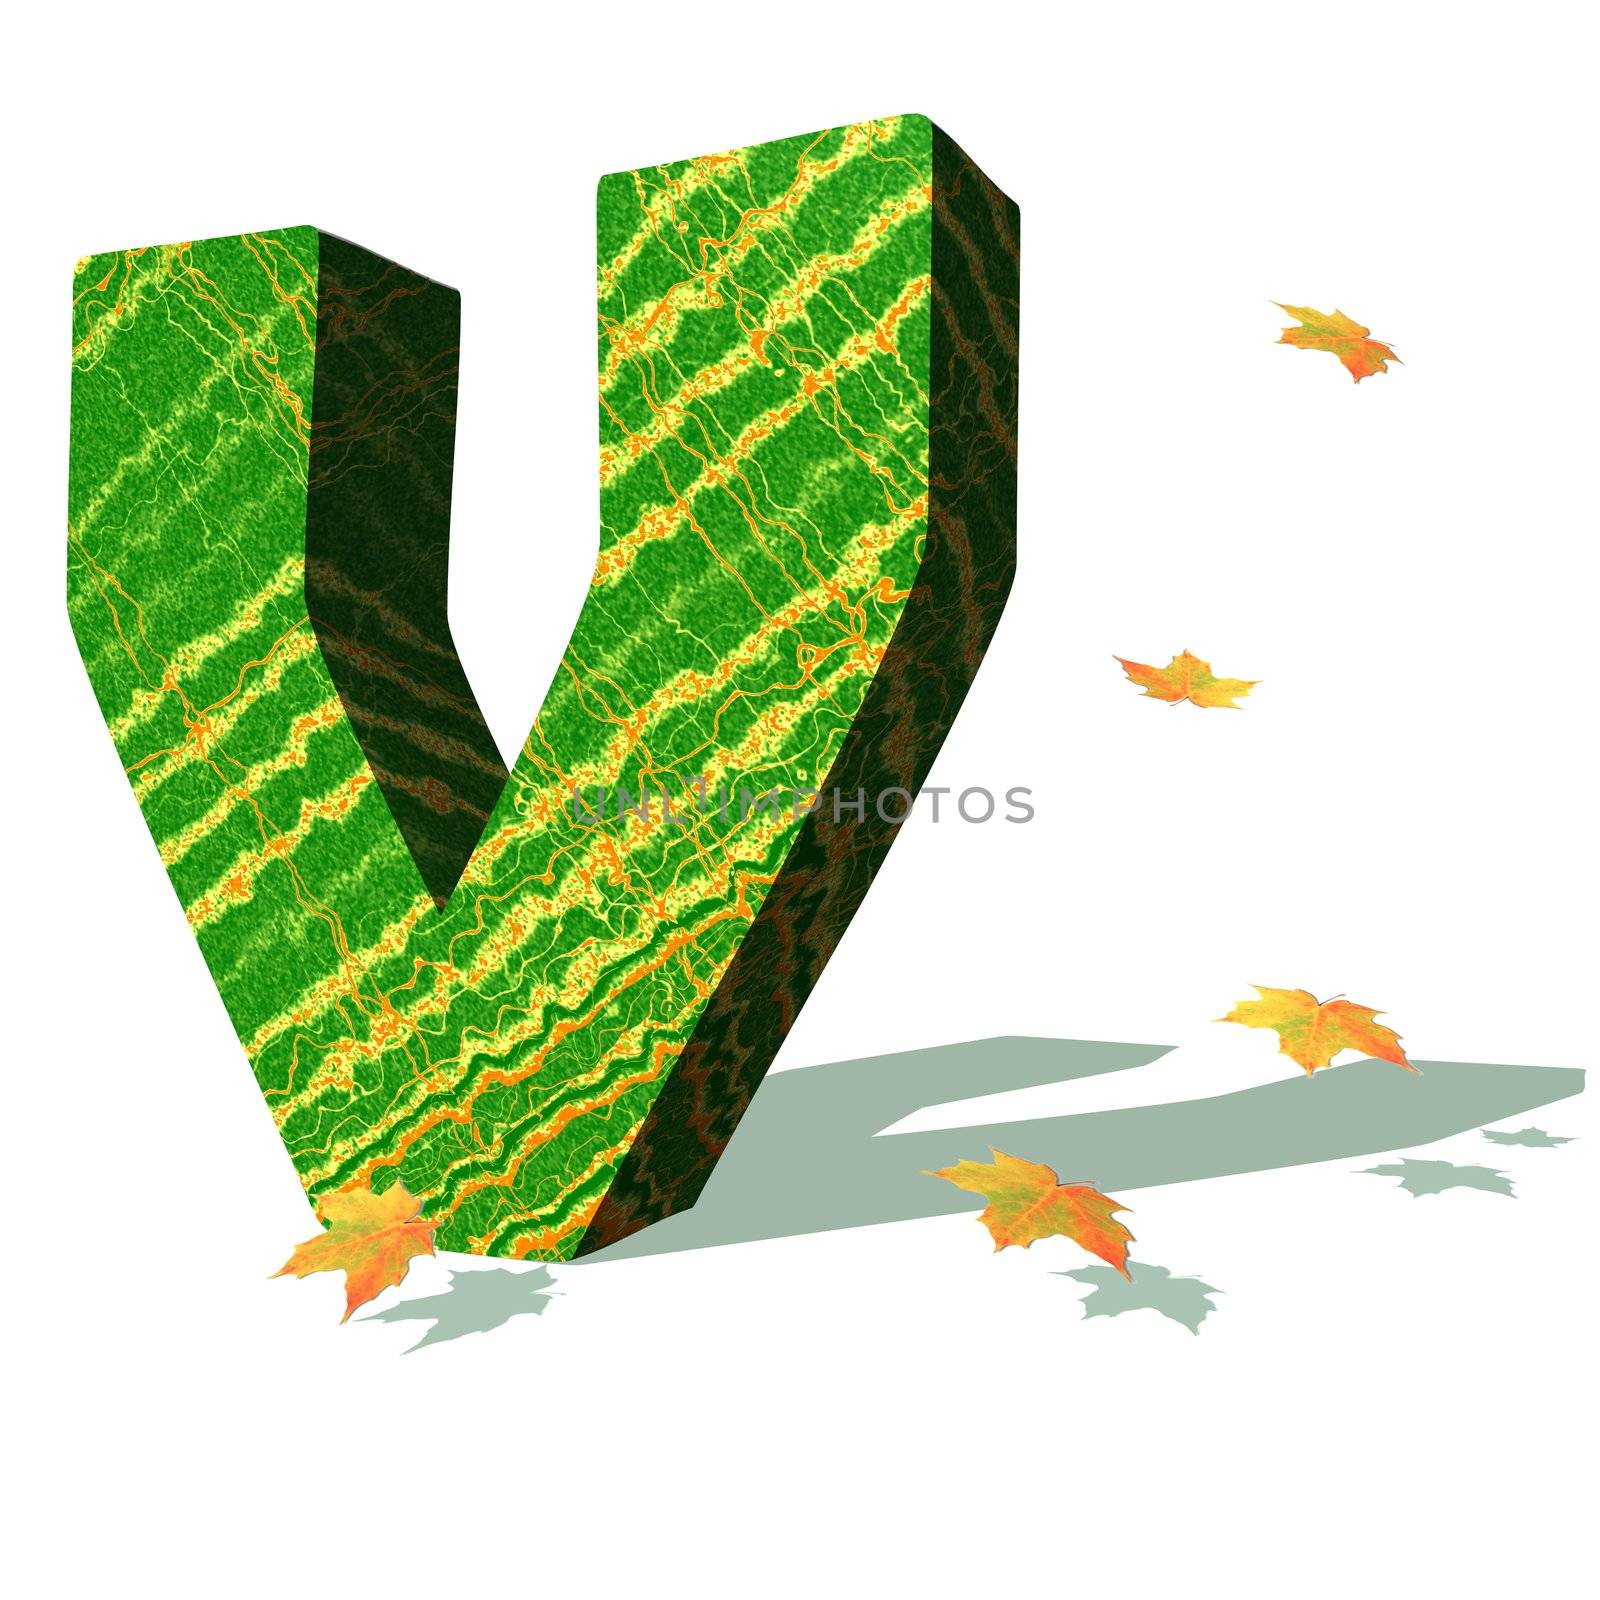 Ecological V letter by Elenaphotos21